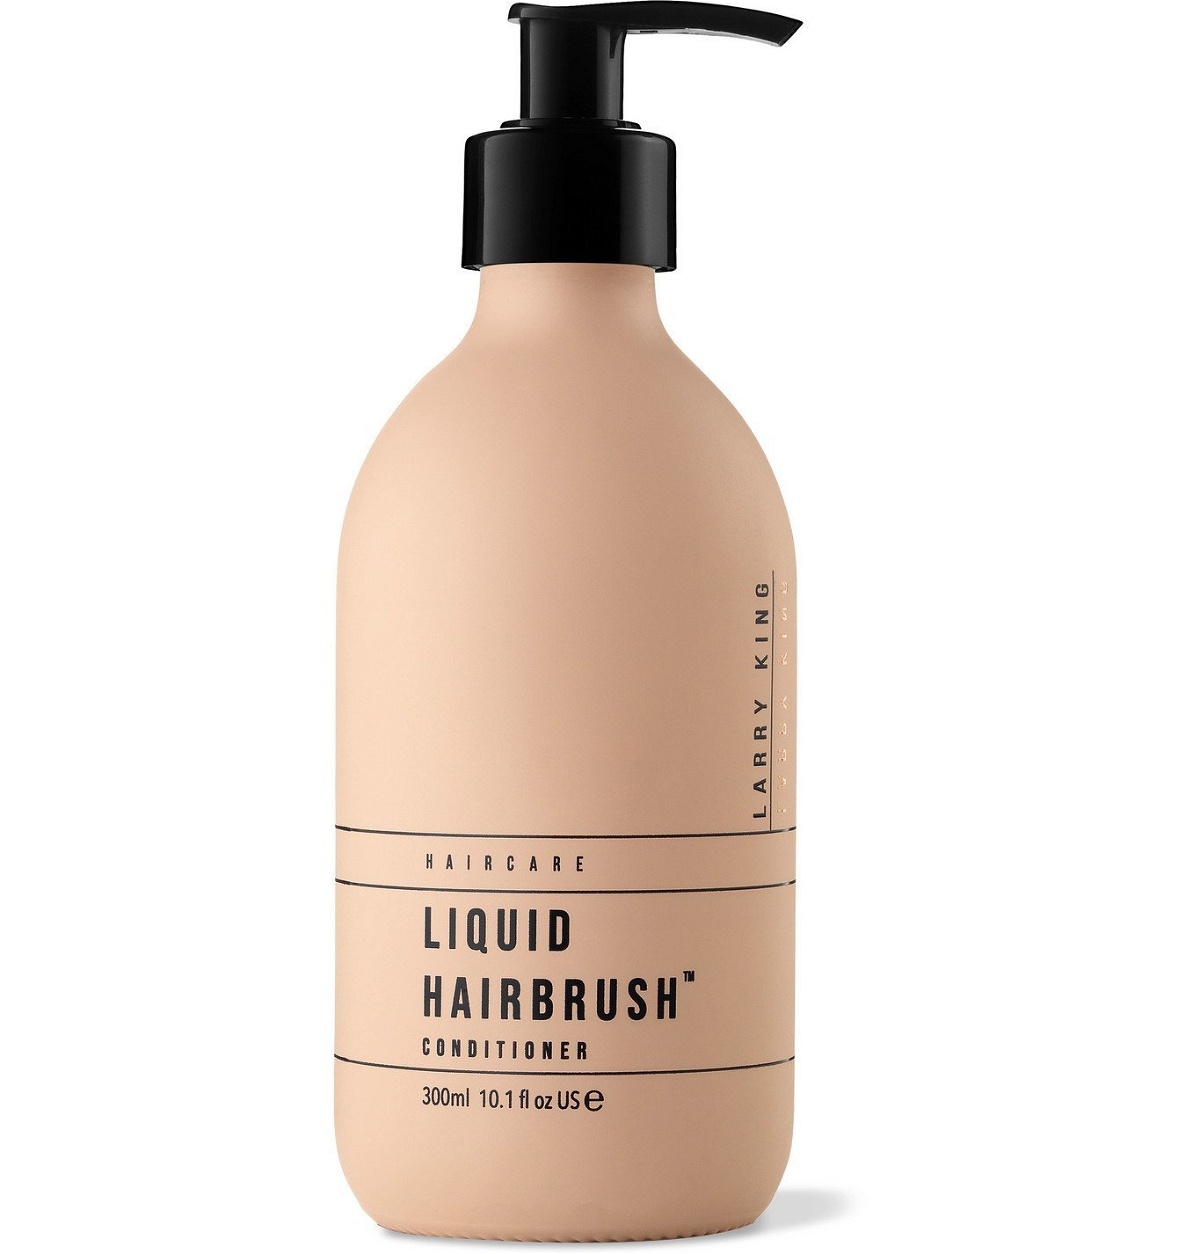 Photo: Larry King - Liquid Hairbrush Conditioner, 300ml - Colorless